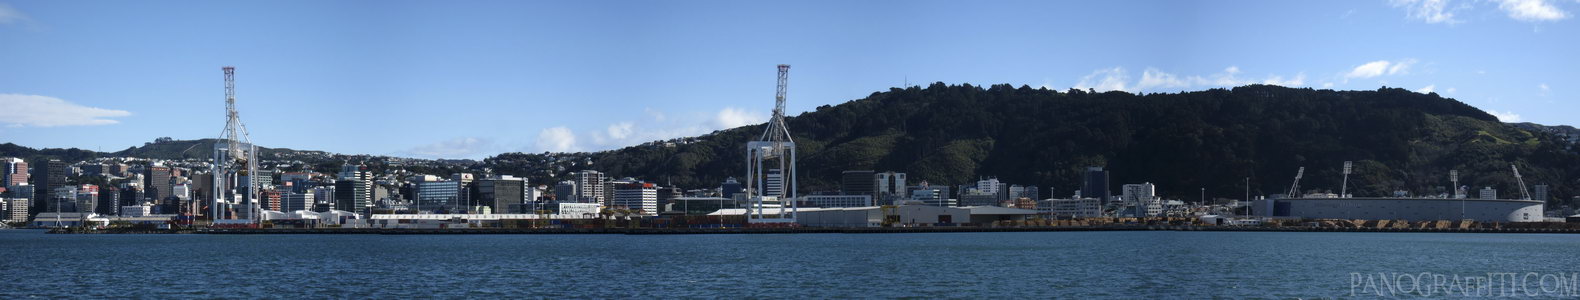 Wellington Port Cranes - The two large lift cranes at the port in Wellington Harbour